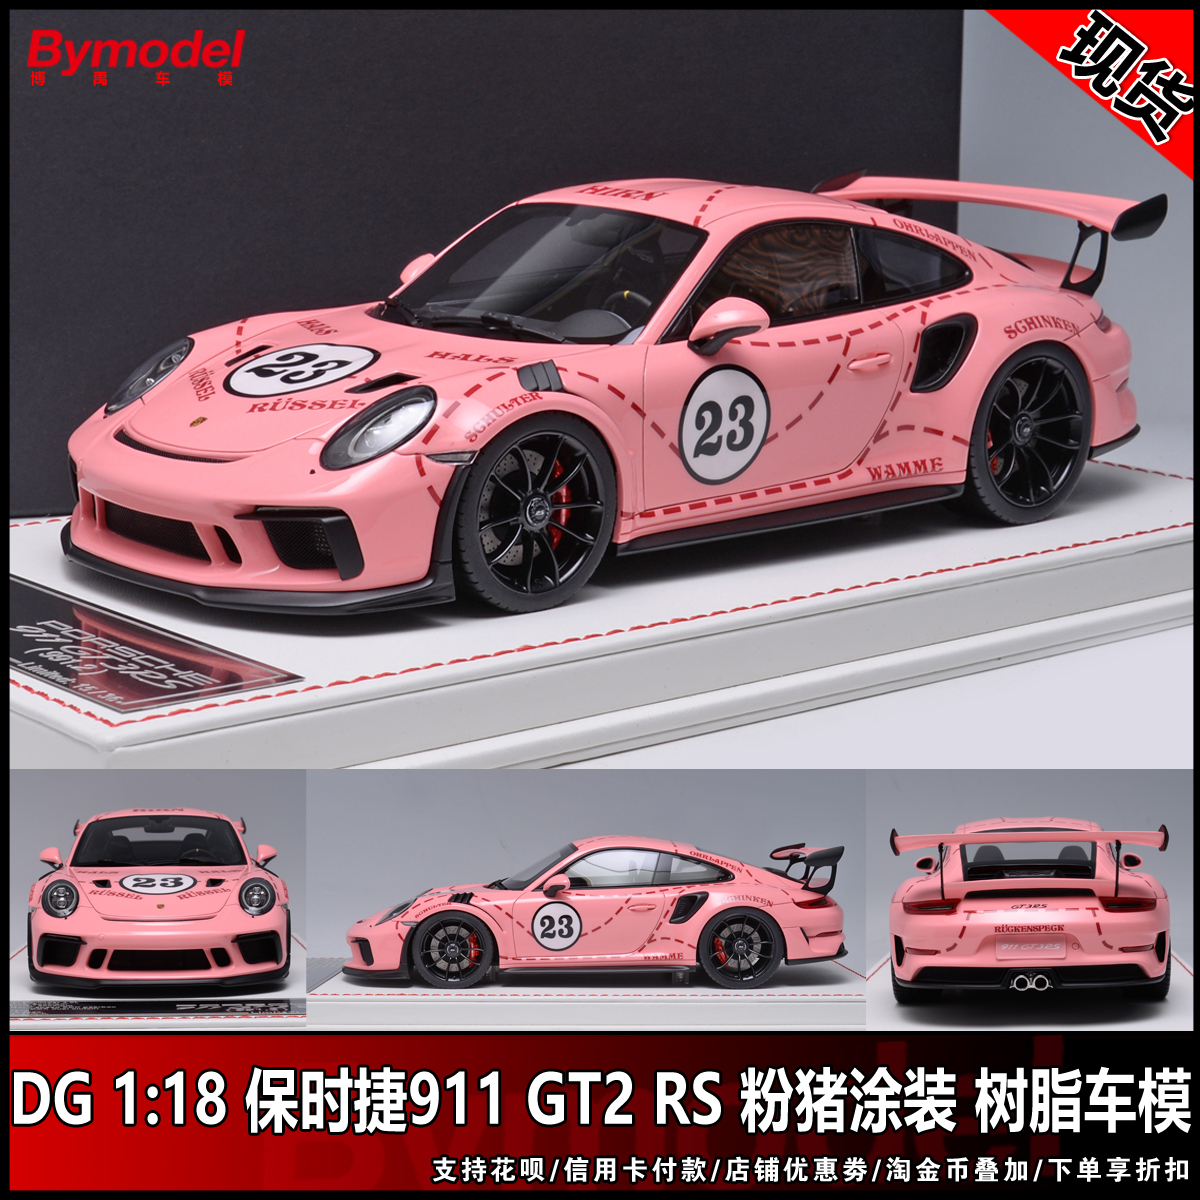 DG 1:18 保时捷Porsche 911 GT2 RS粉猪涂装 高端限量版 树脂车模